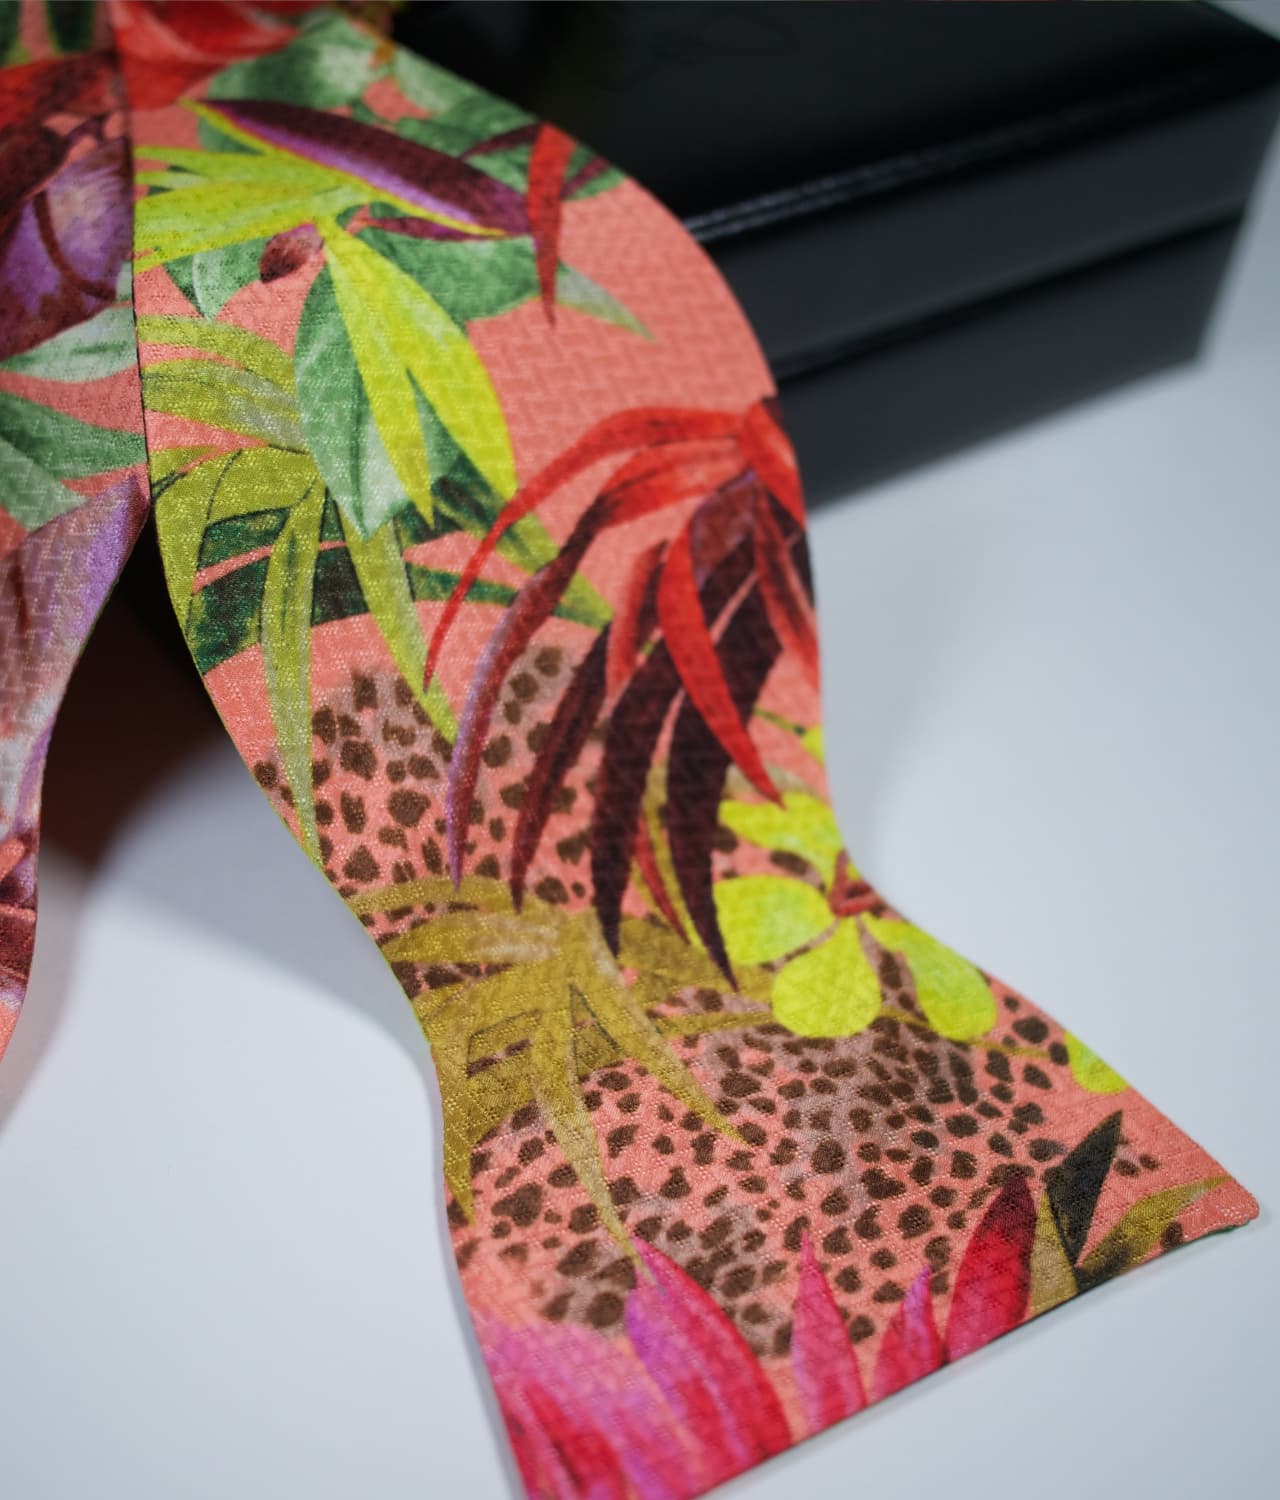 Pink Bow Tie - 100% Silk - Floral Design - BGY9